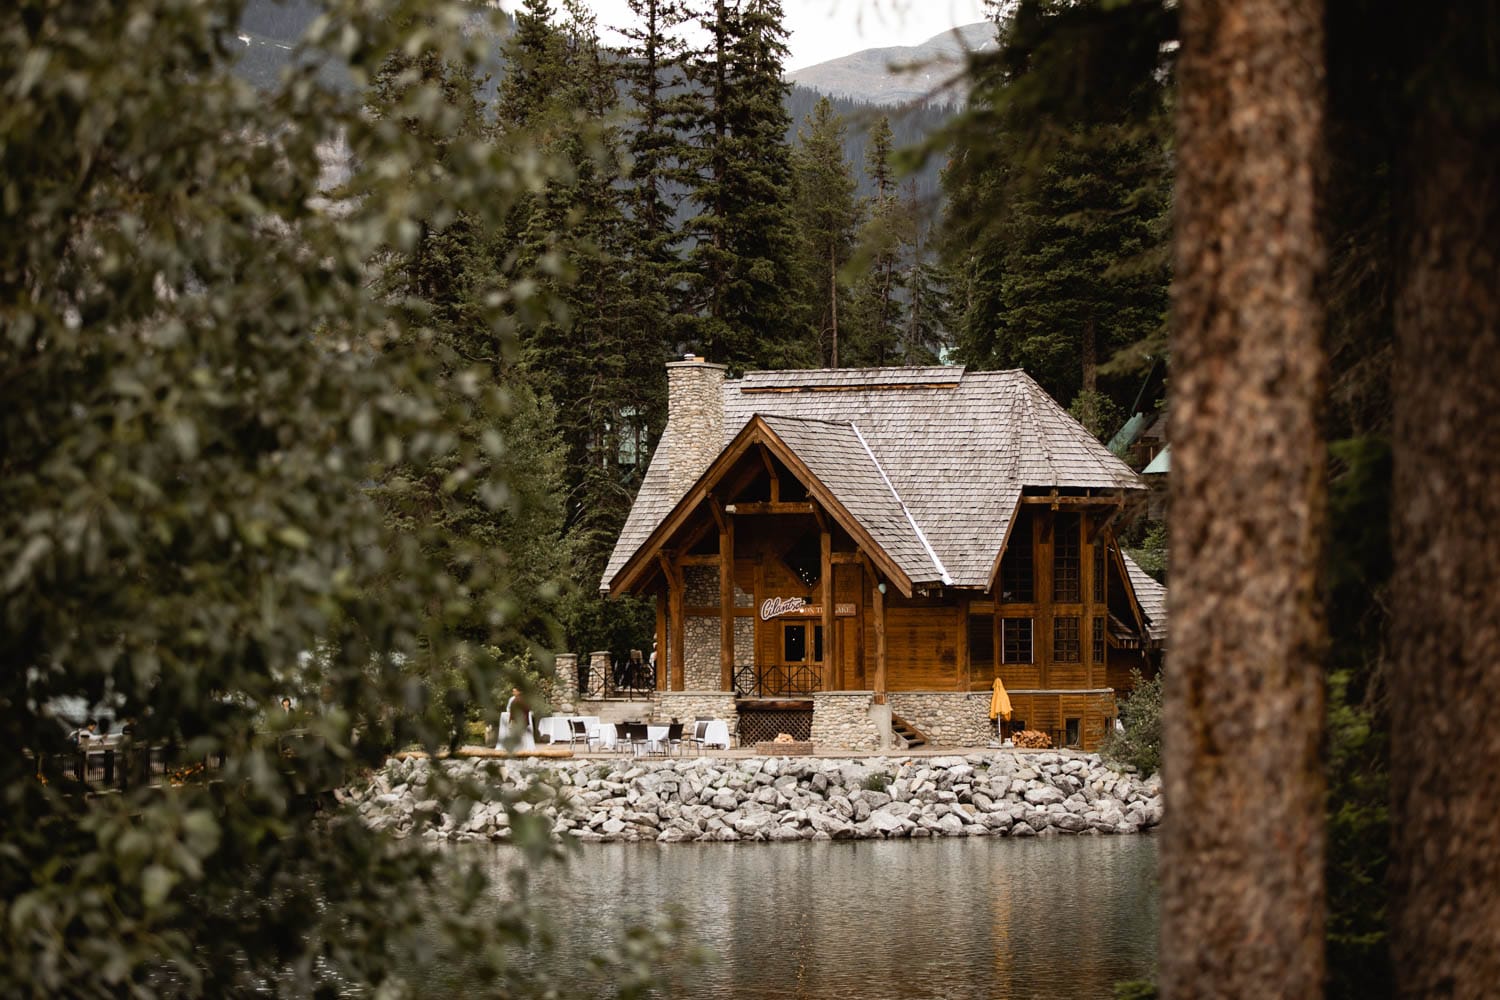 Emerald Lake Lodge